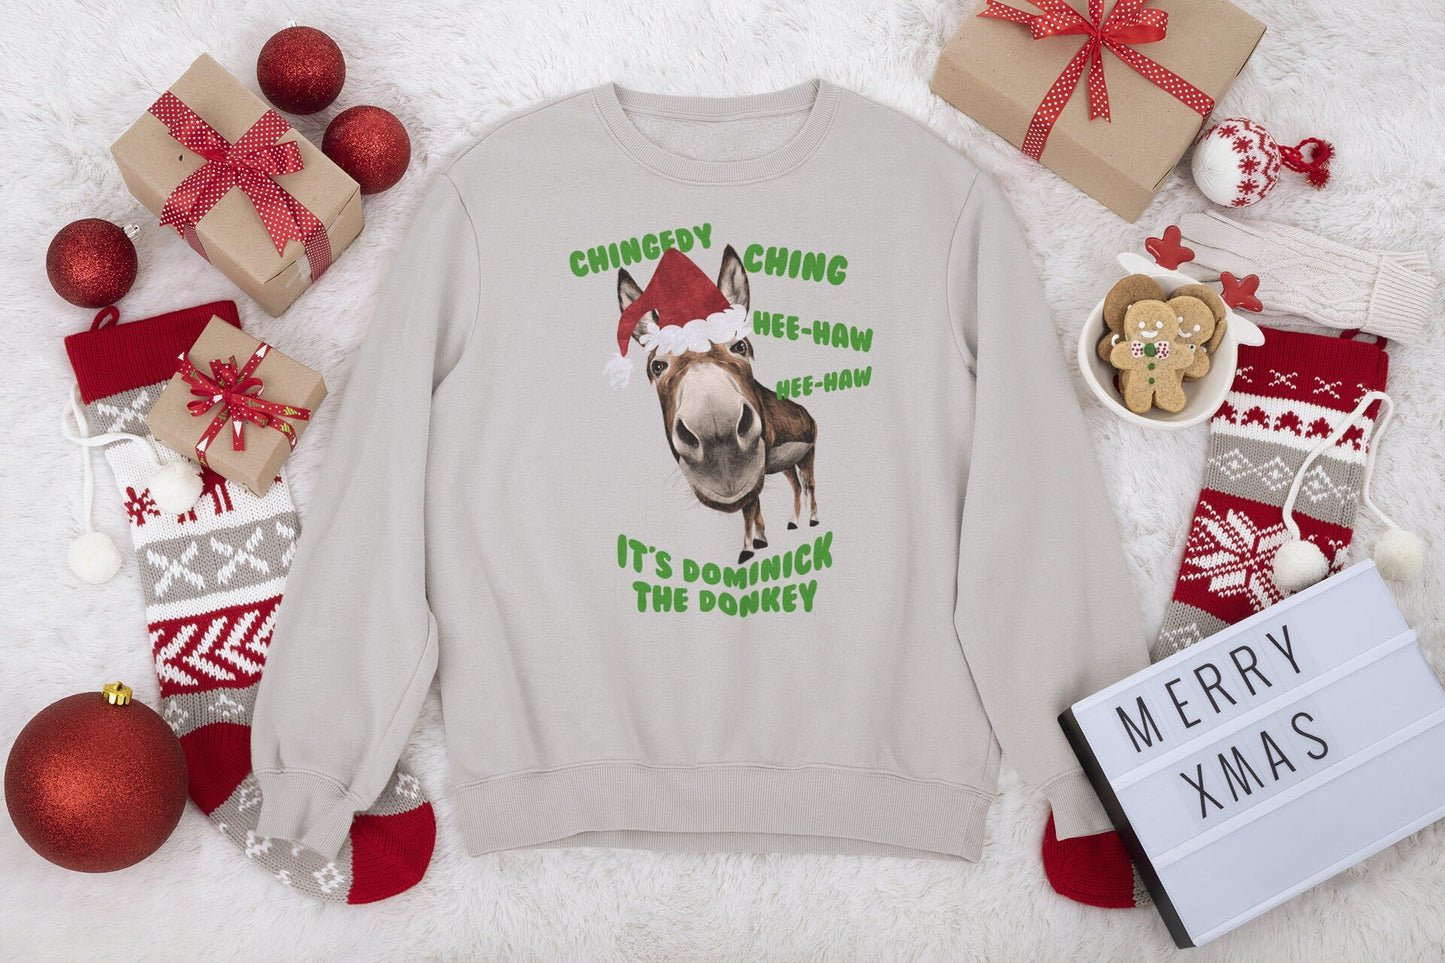 Dominick the Donkey Sweatshirt xmas sweatshirt italian christmas carol song shirt gift for her mom mother in law step mom girlfriend - SBS T Shop